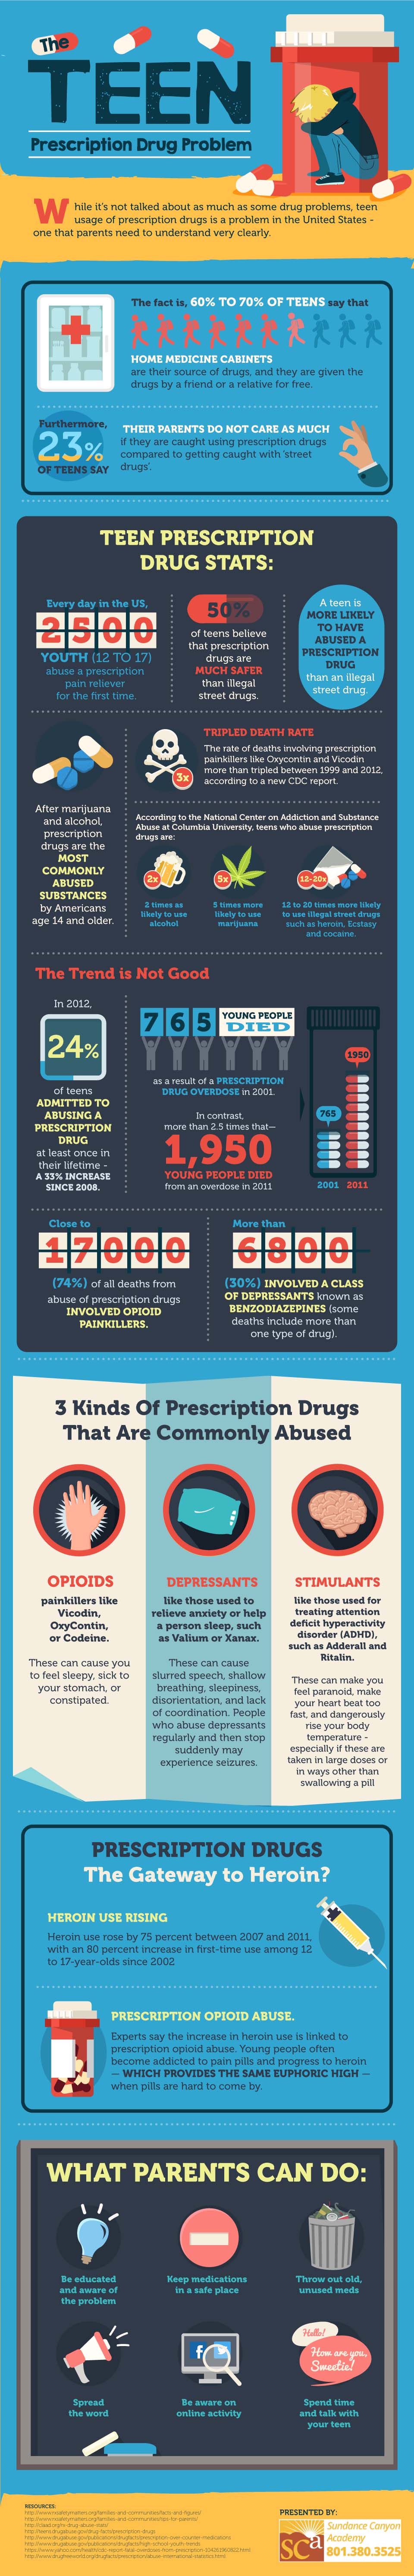 Teen Prescription Drug Use Problems 